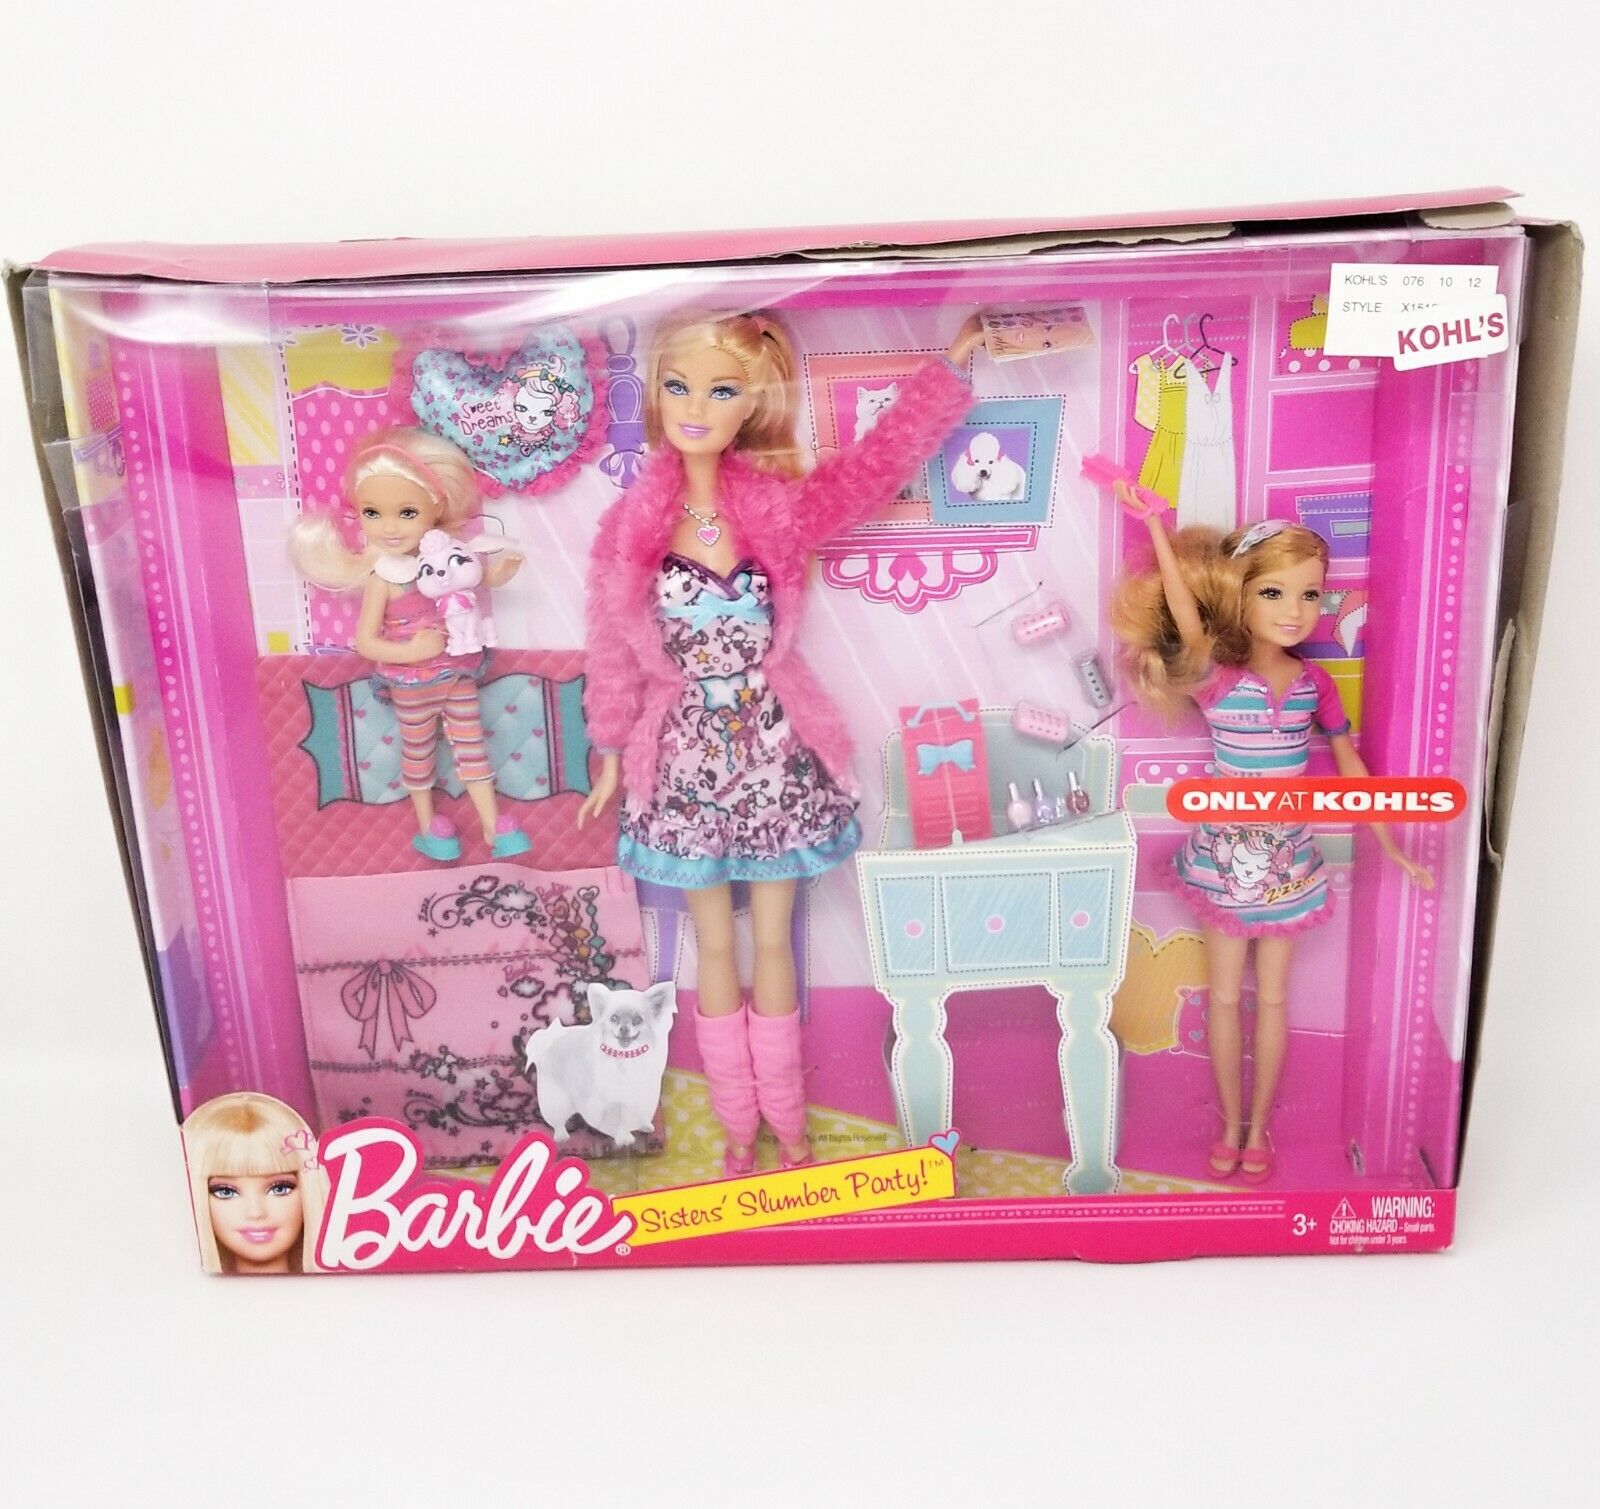 Barbie Sisters Slumber Party Dolls Accessories 2010 Kohl's Exclusive Mattel